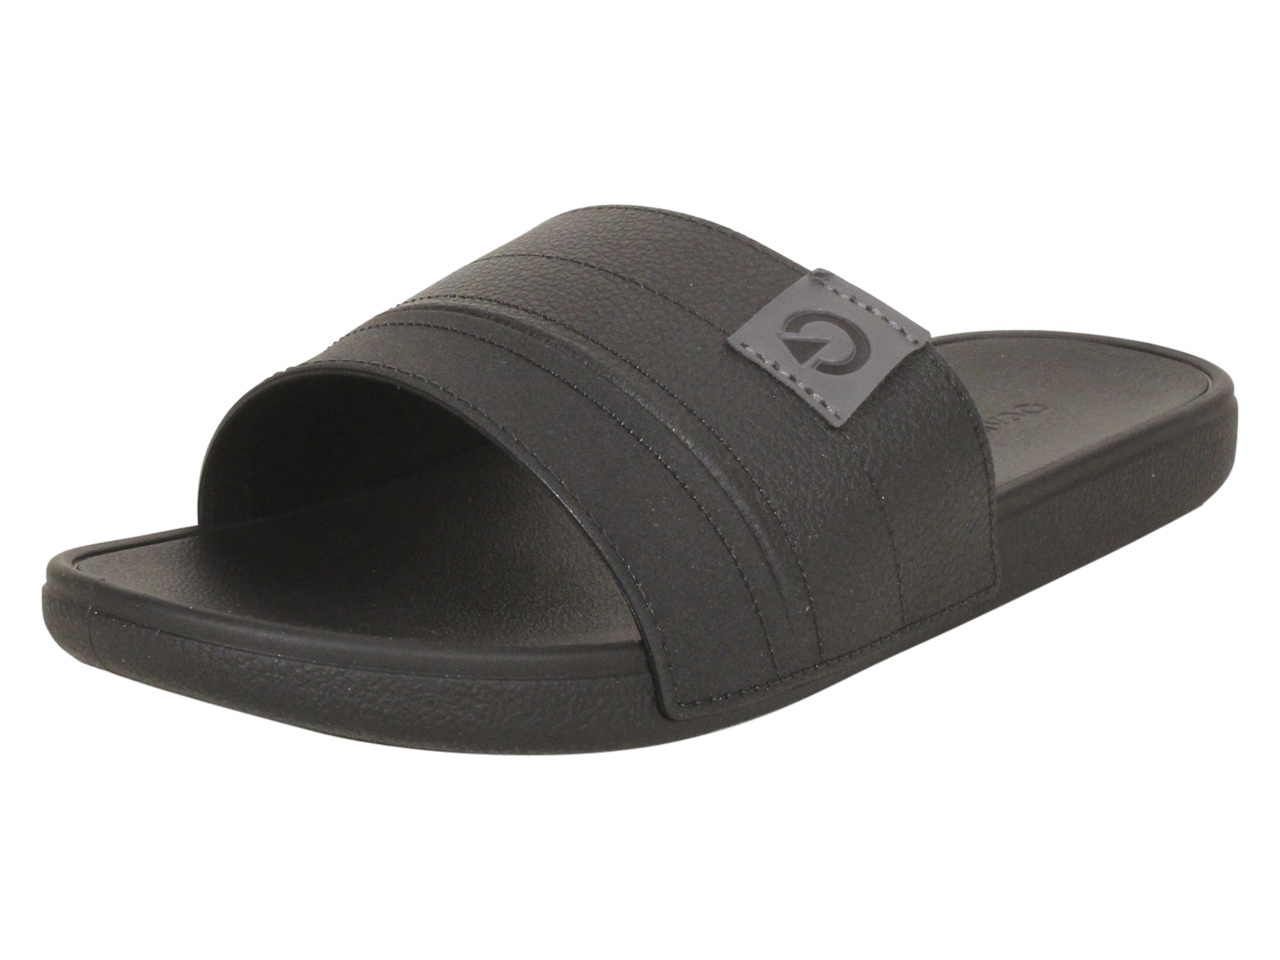 Cartago Dakar Slides Black/Black Men's Comfort Sandals Shoes Sz: 8 ...